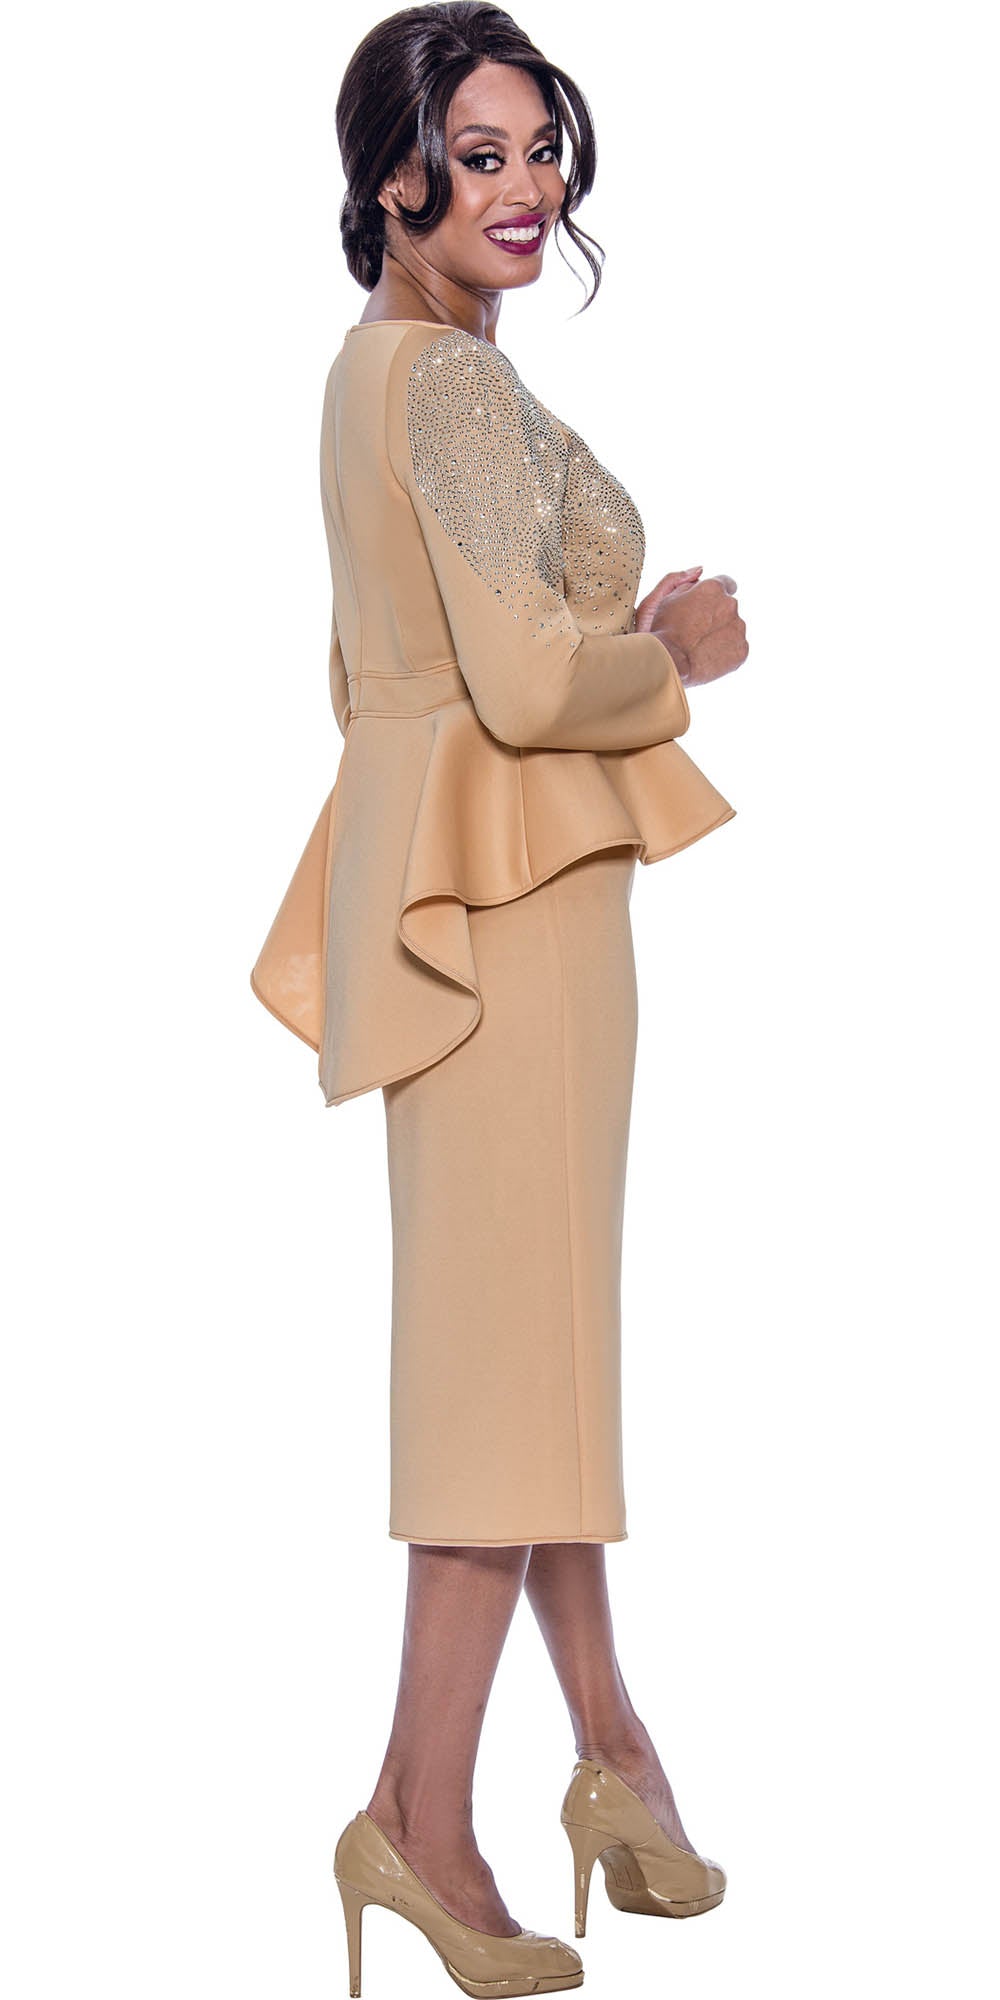 Stellar Looks 1961 - Champagne - Embellished Scuba Dress